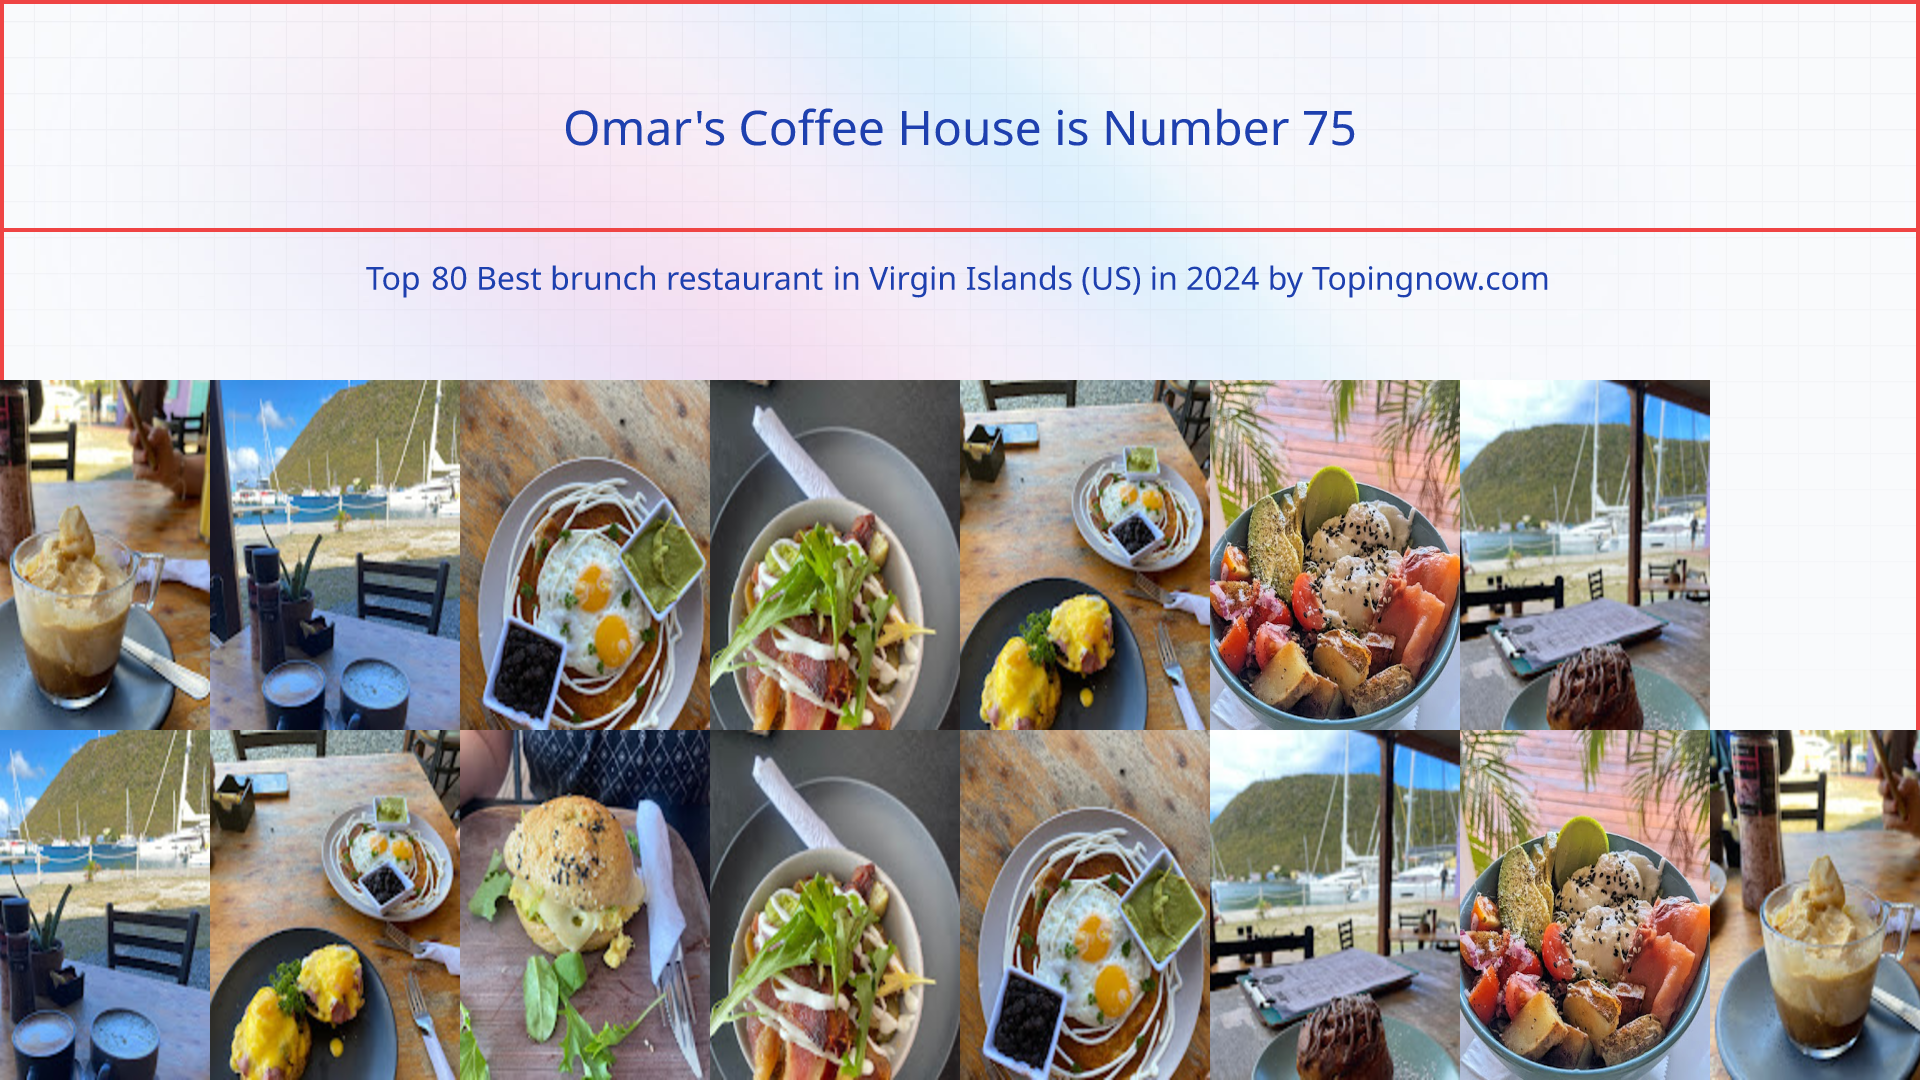 Omar's Coffee House: Top 80 Best brunch restaurant in Virgin Islands (US) in 2024